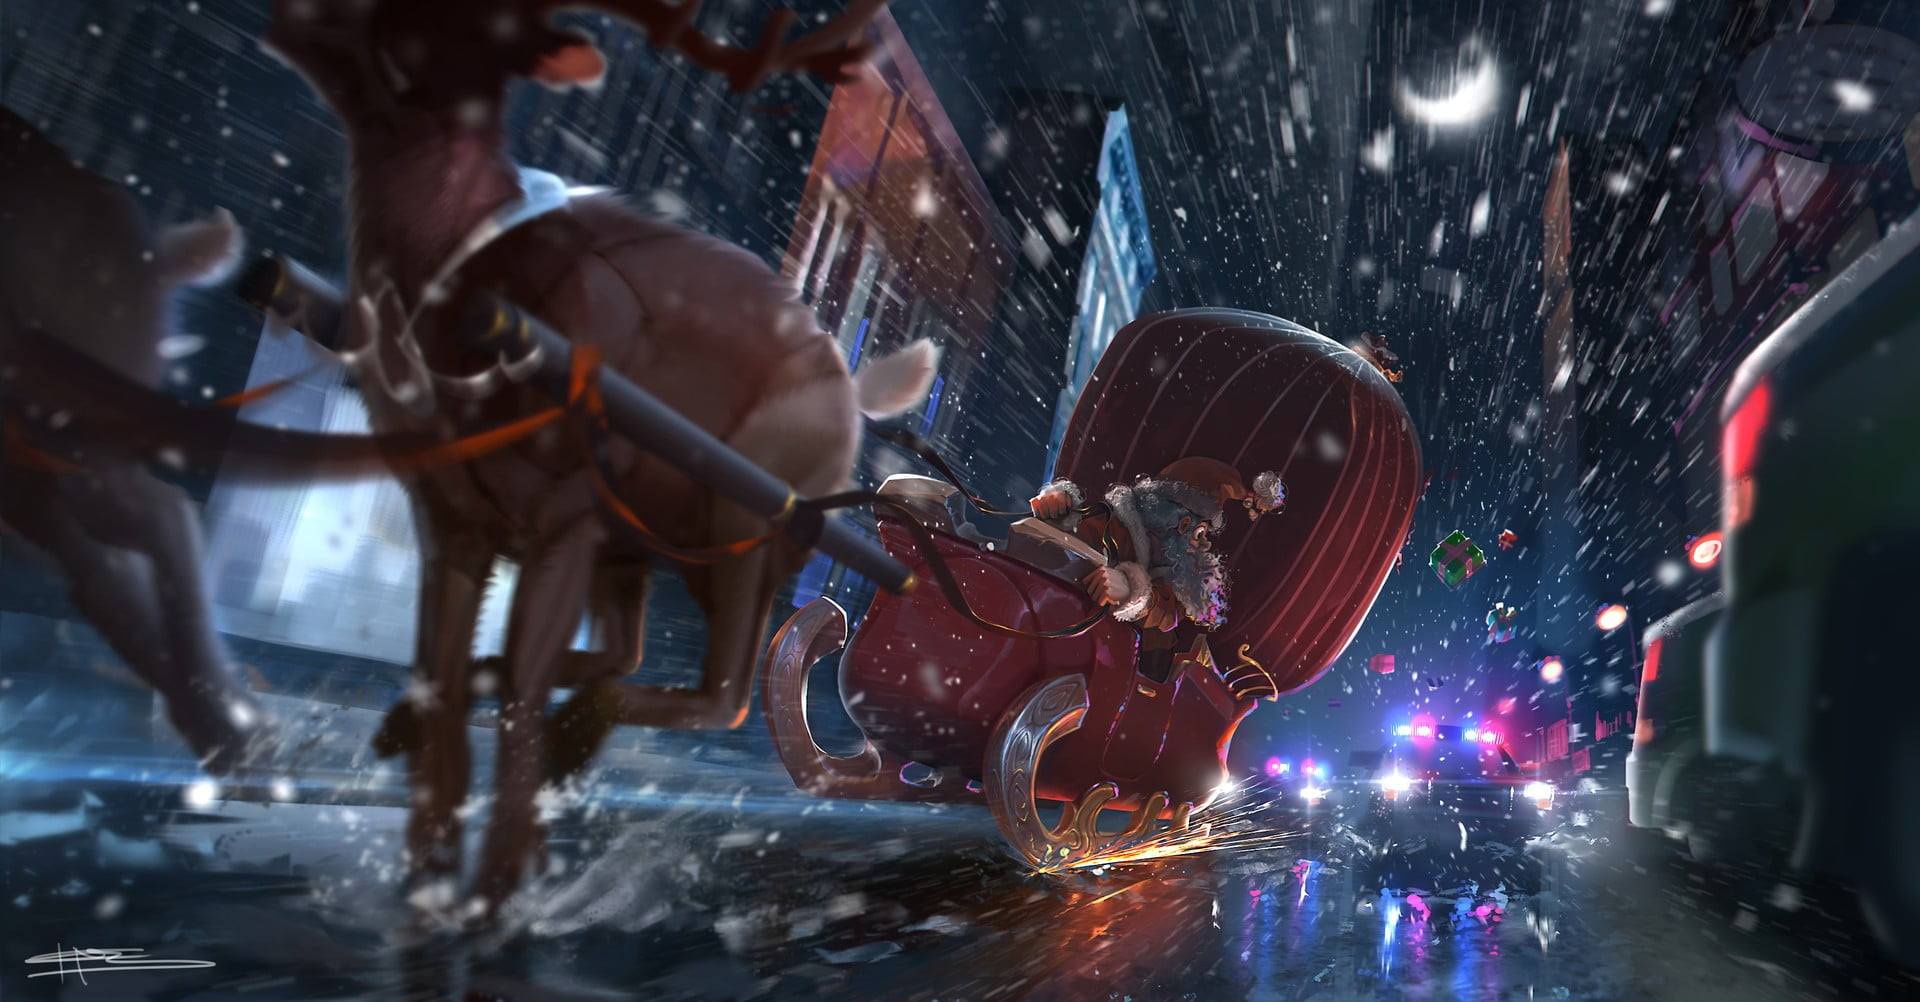 Santa Claus ride on sleigh during nighttime, illustration, snow